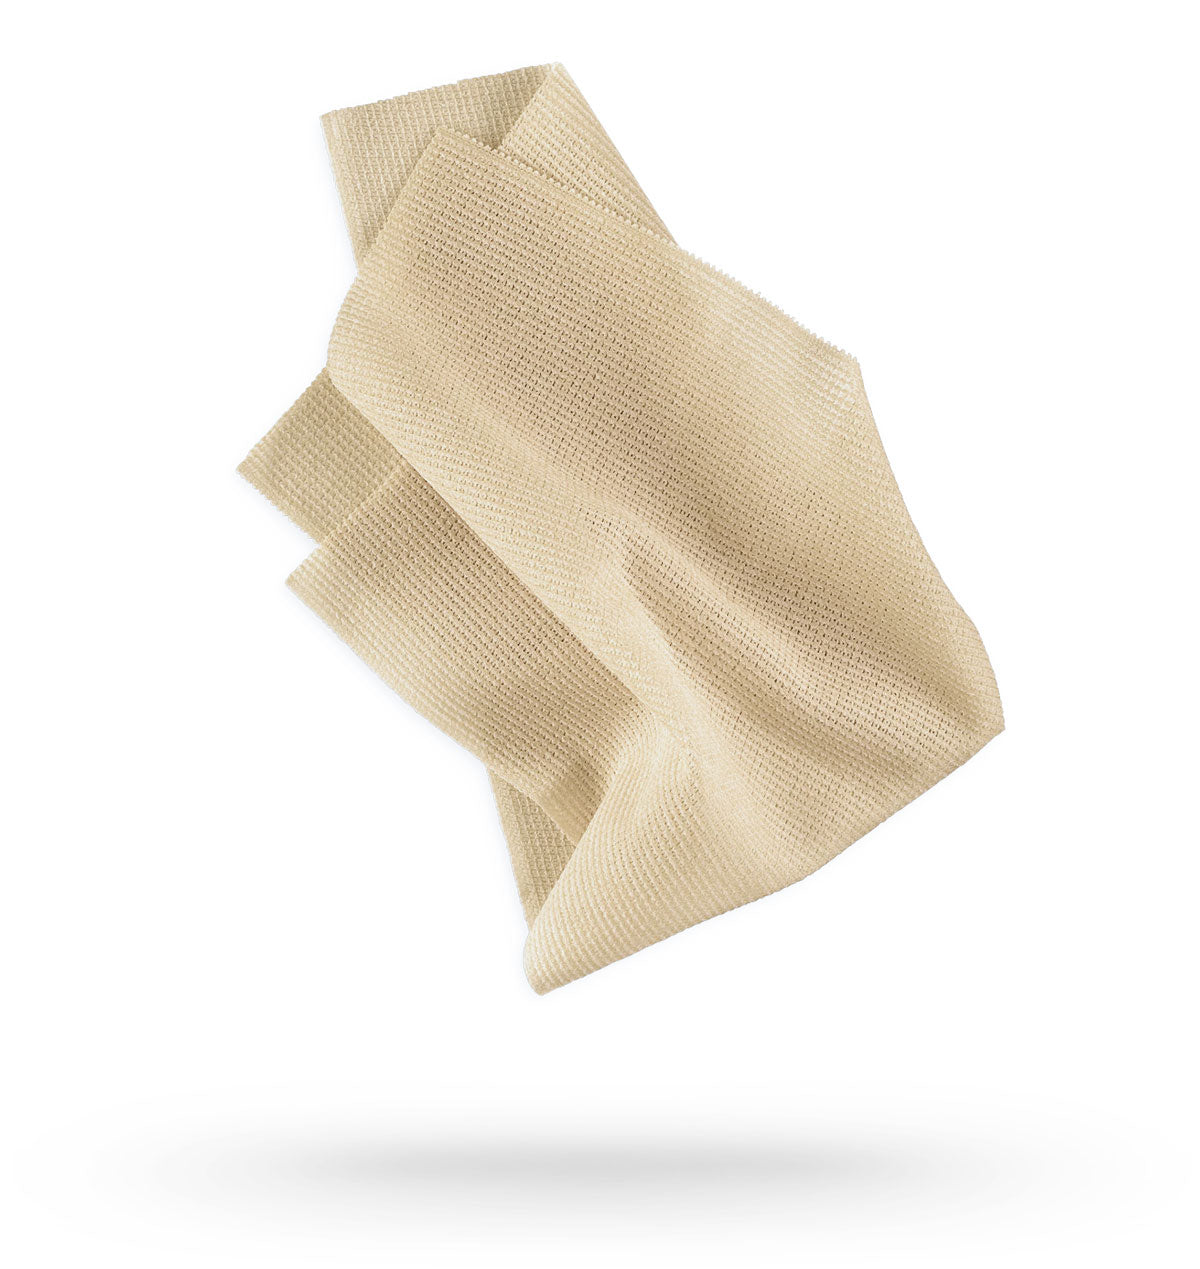 Gamma Tacky Towel Grip Enhancer